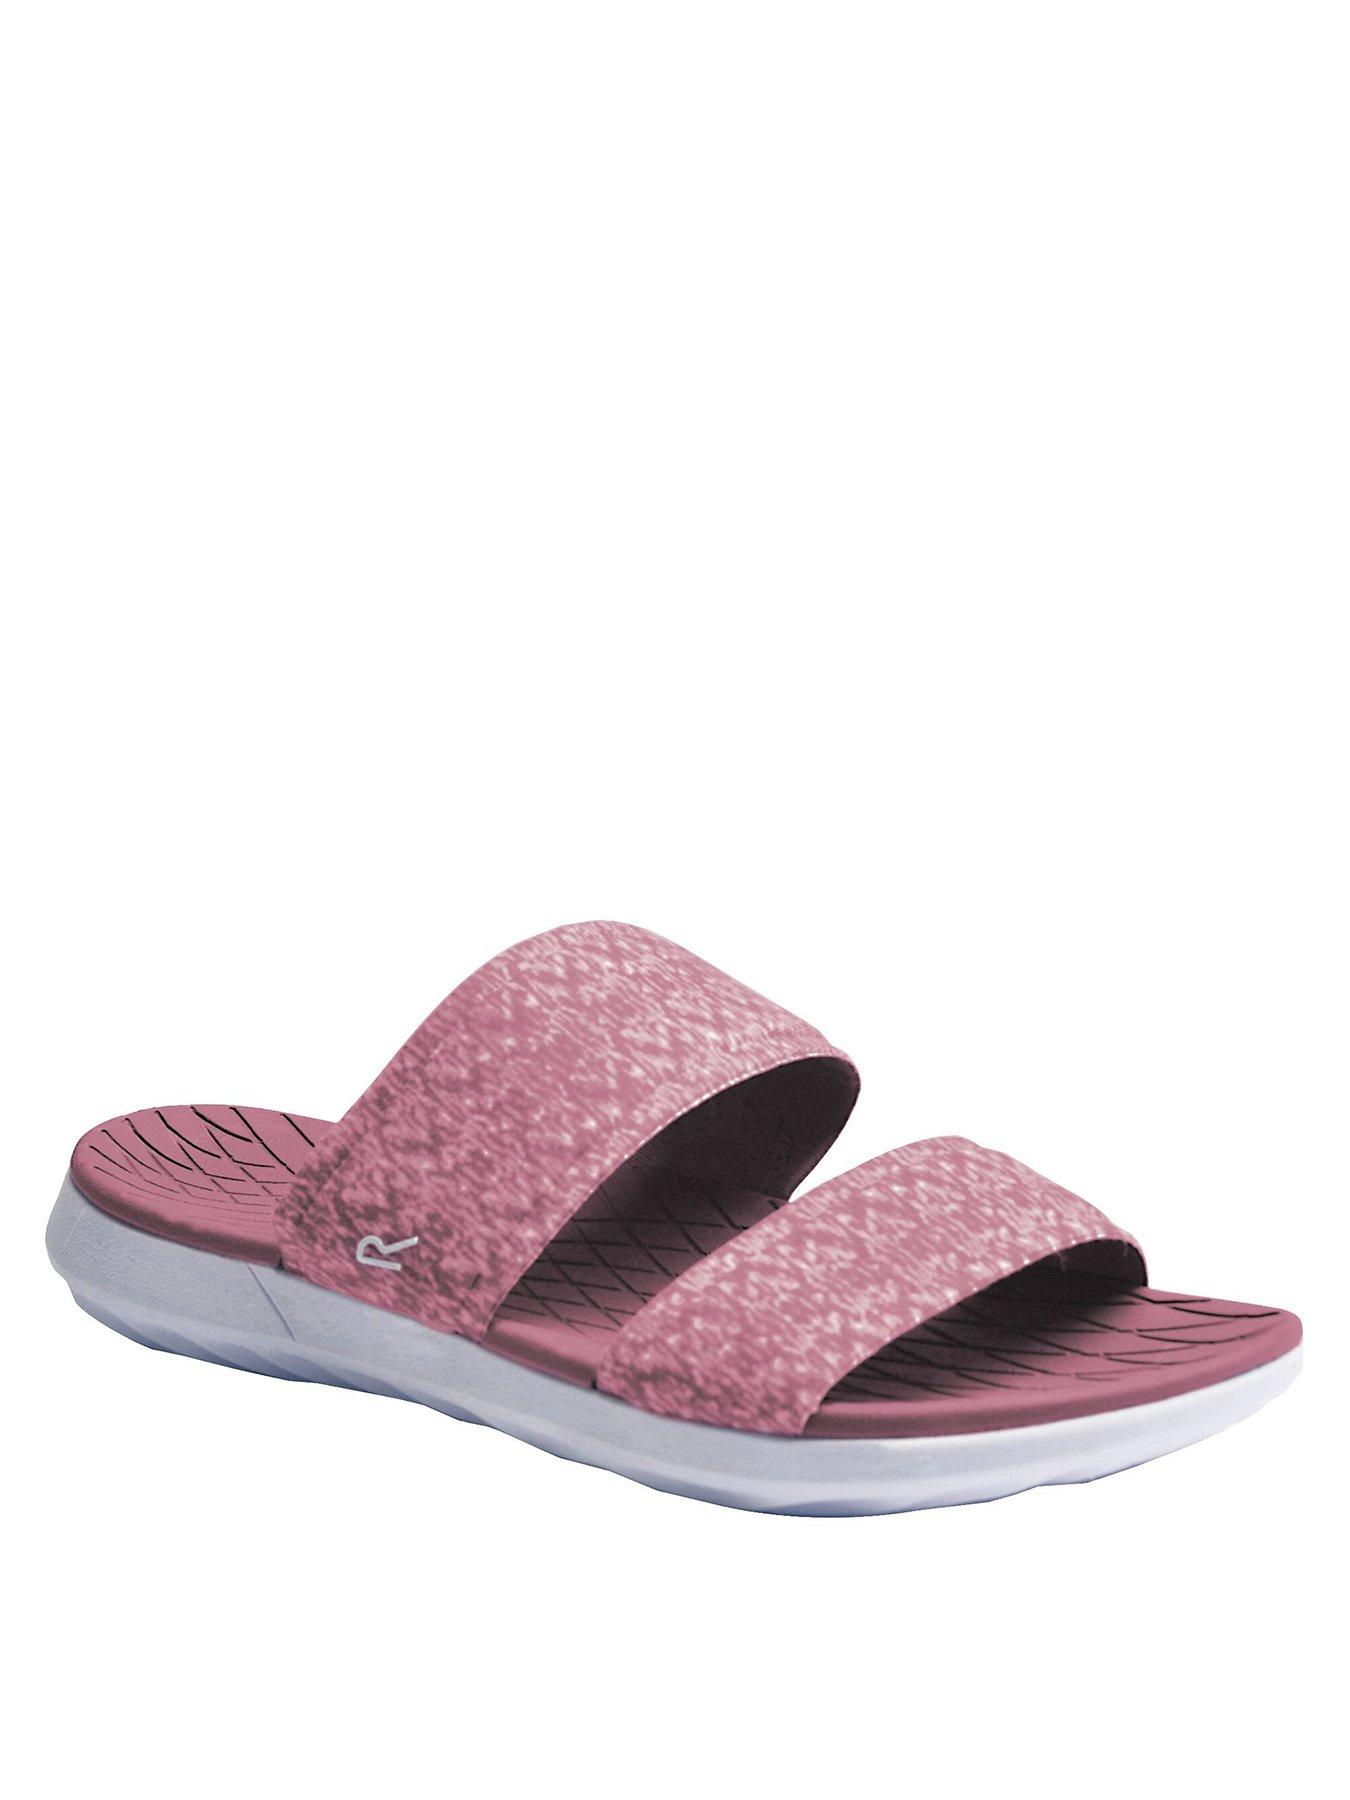  Tyla Sandals - Light Pink